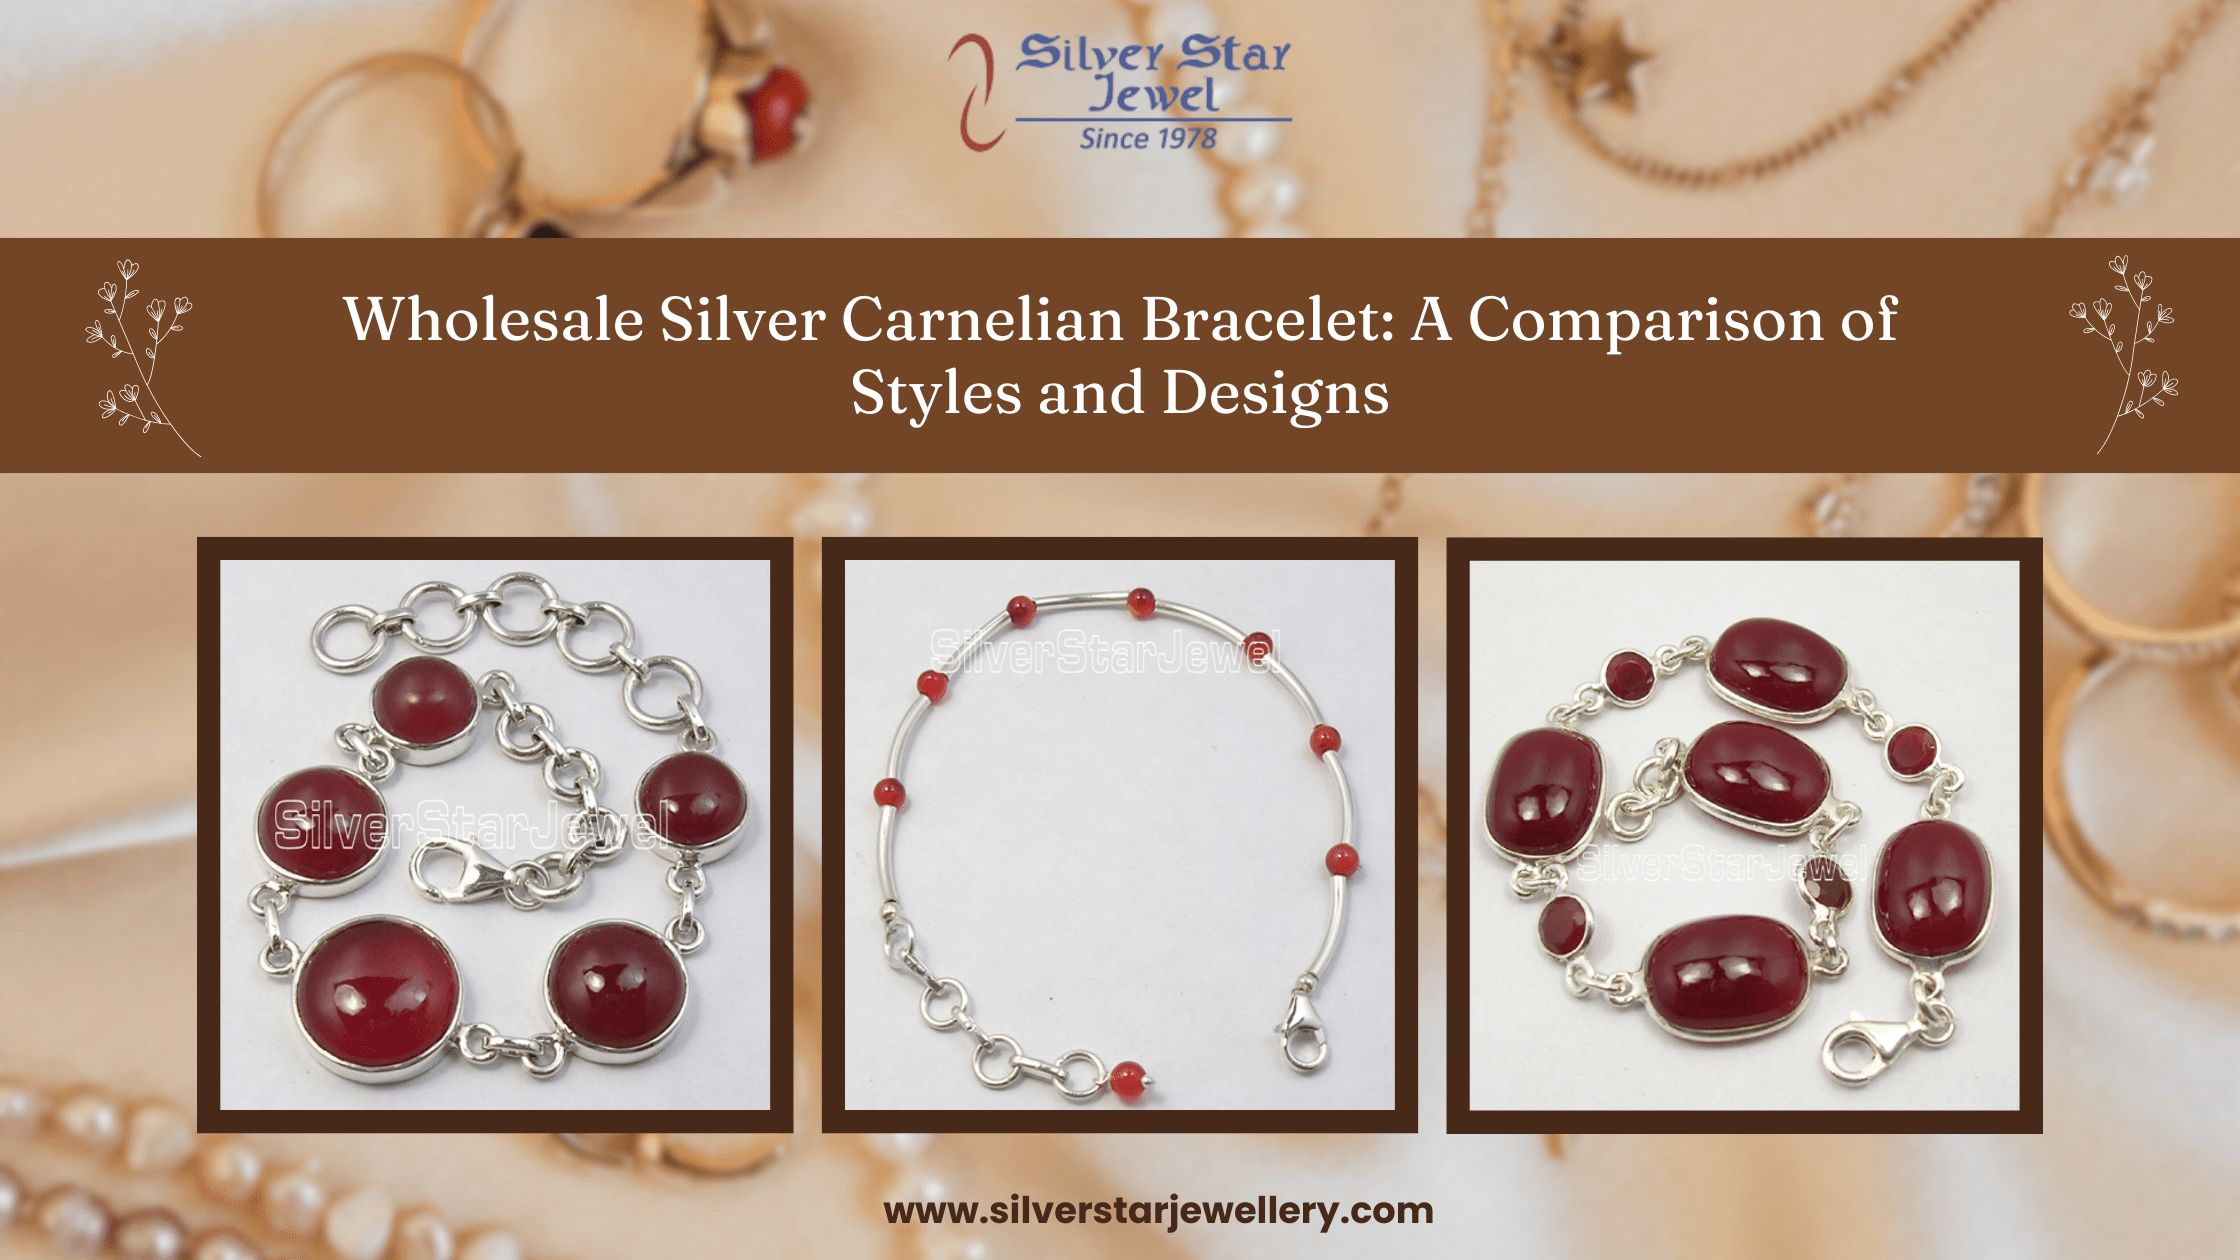 Wholesale Silver Carnelian Bracelet: A Comparison of Styles and Designs